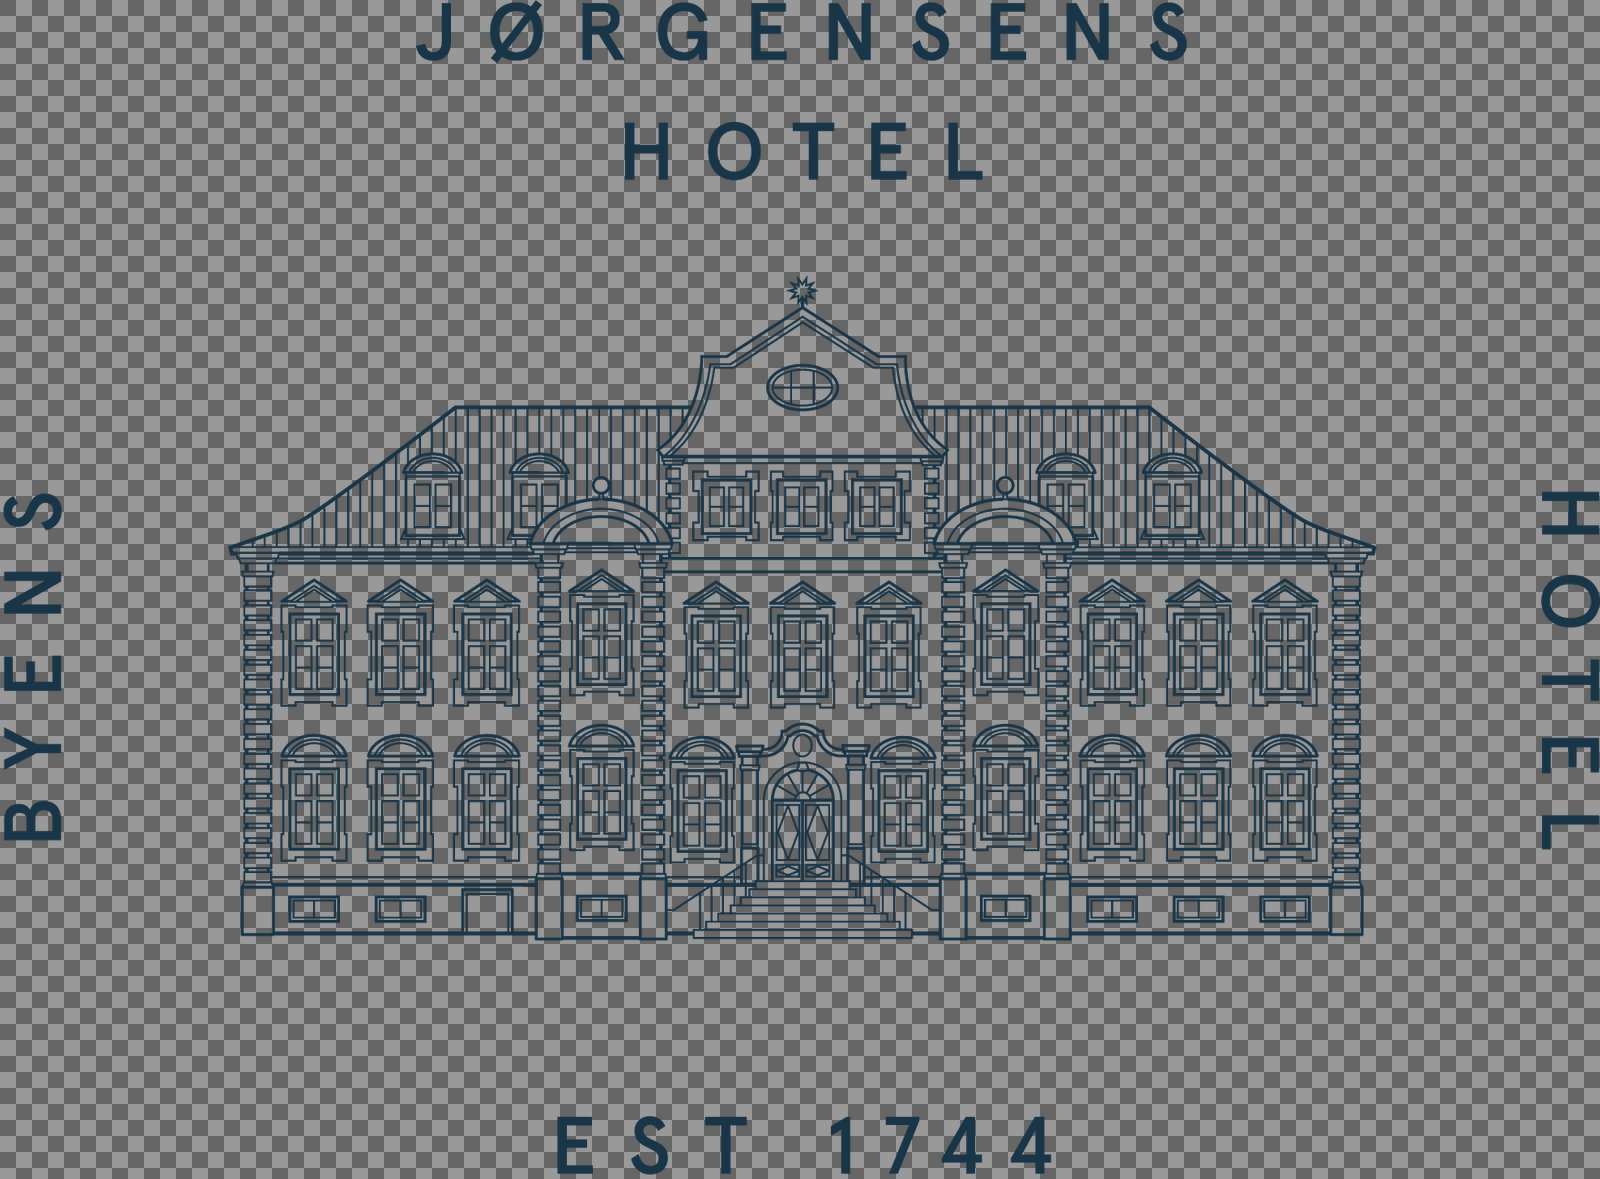 Jørgensens Hotel, Logo